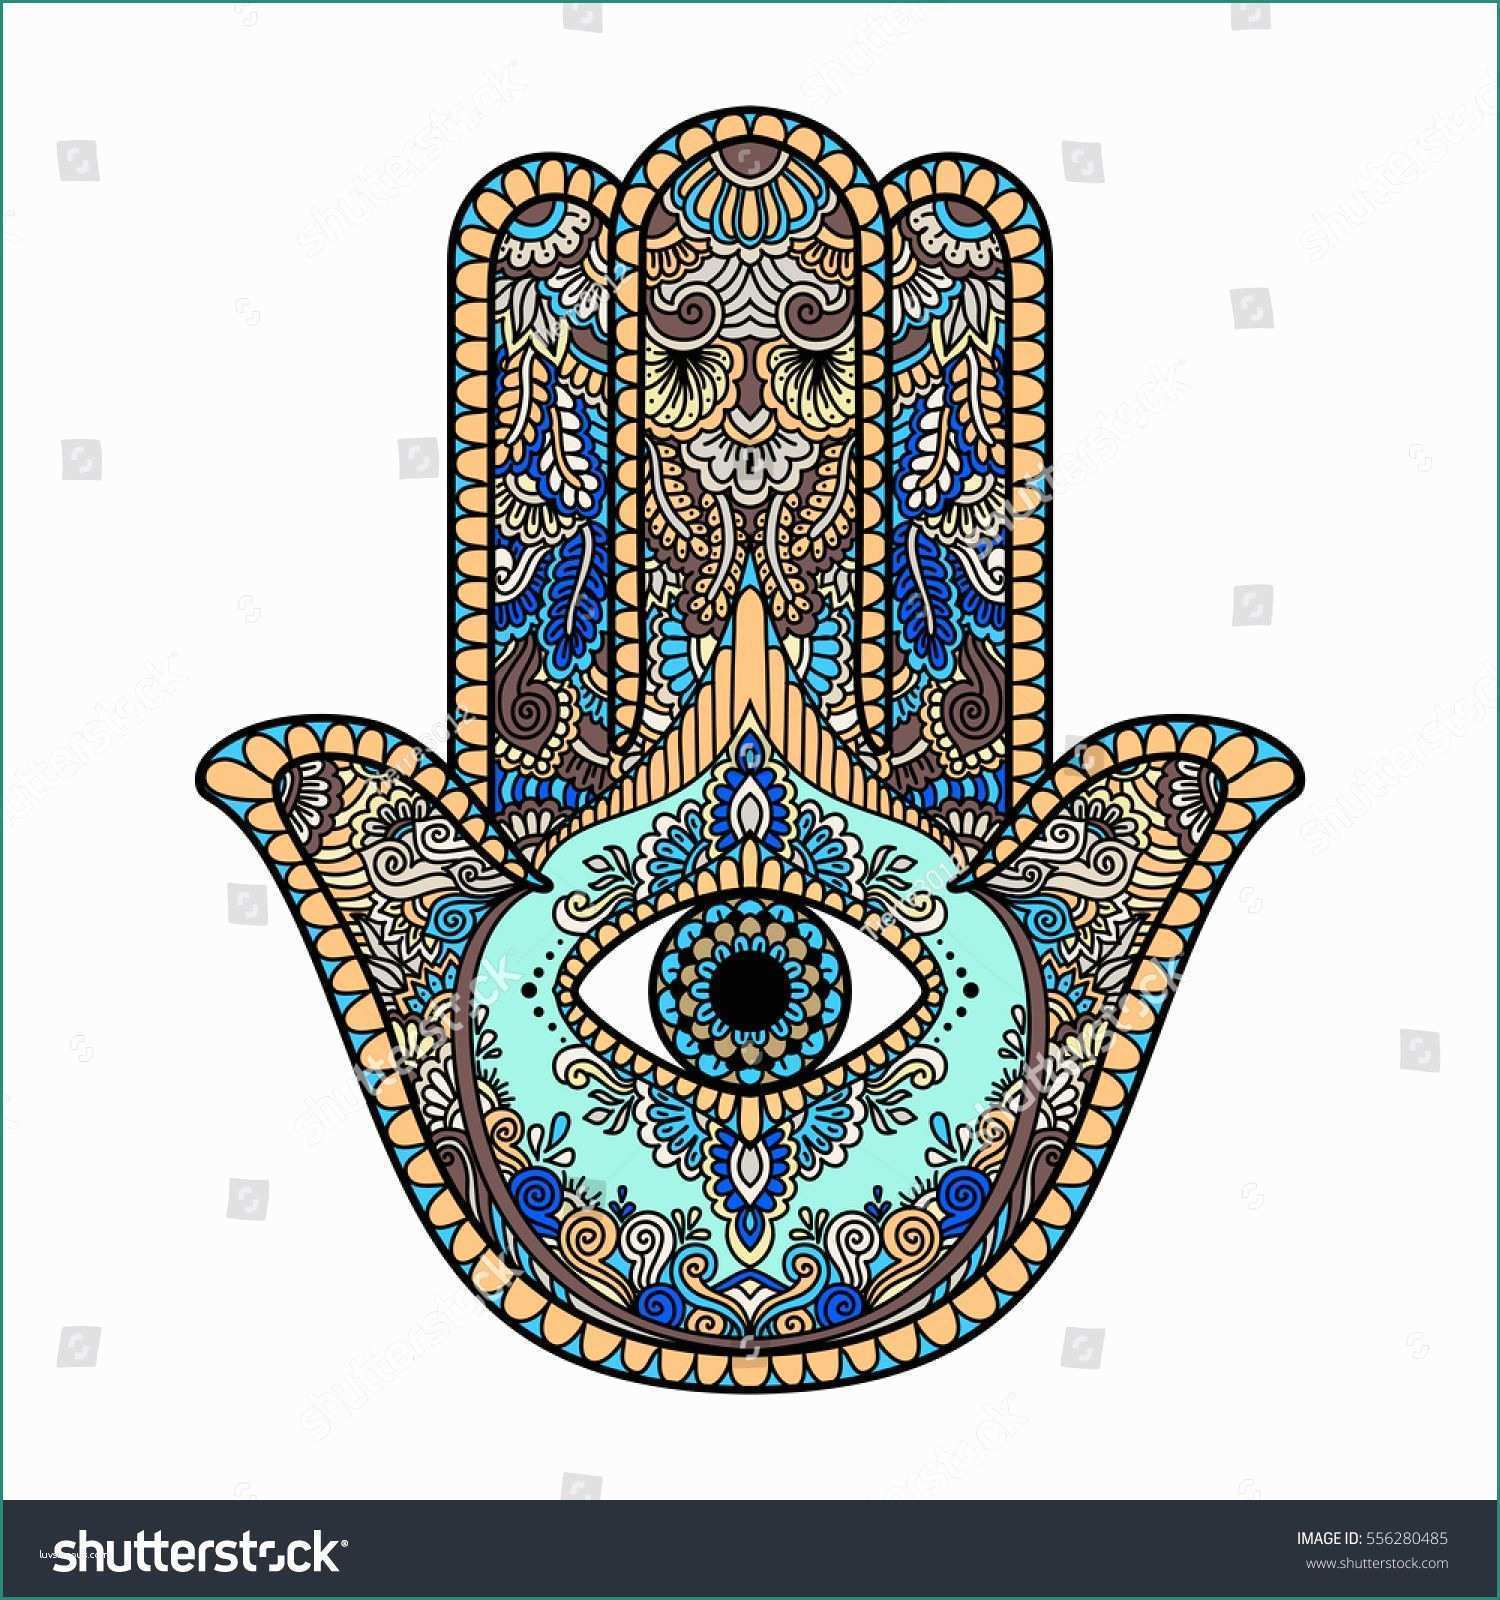 Leroy Merlin Scaffali E Multicolored Illustration Of A Hamsa Hand Symbol Hand Of Fatima